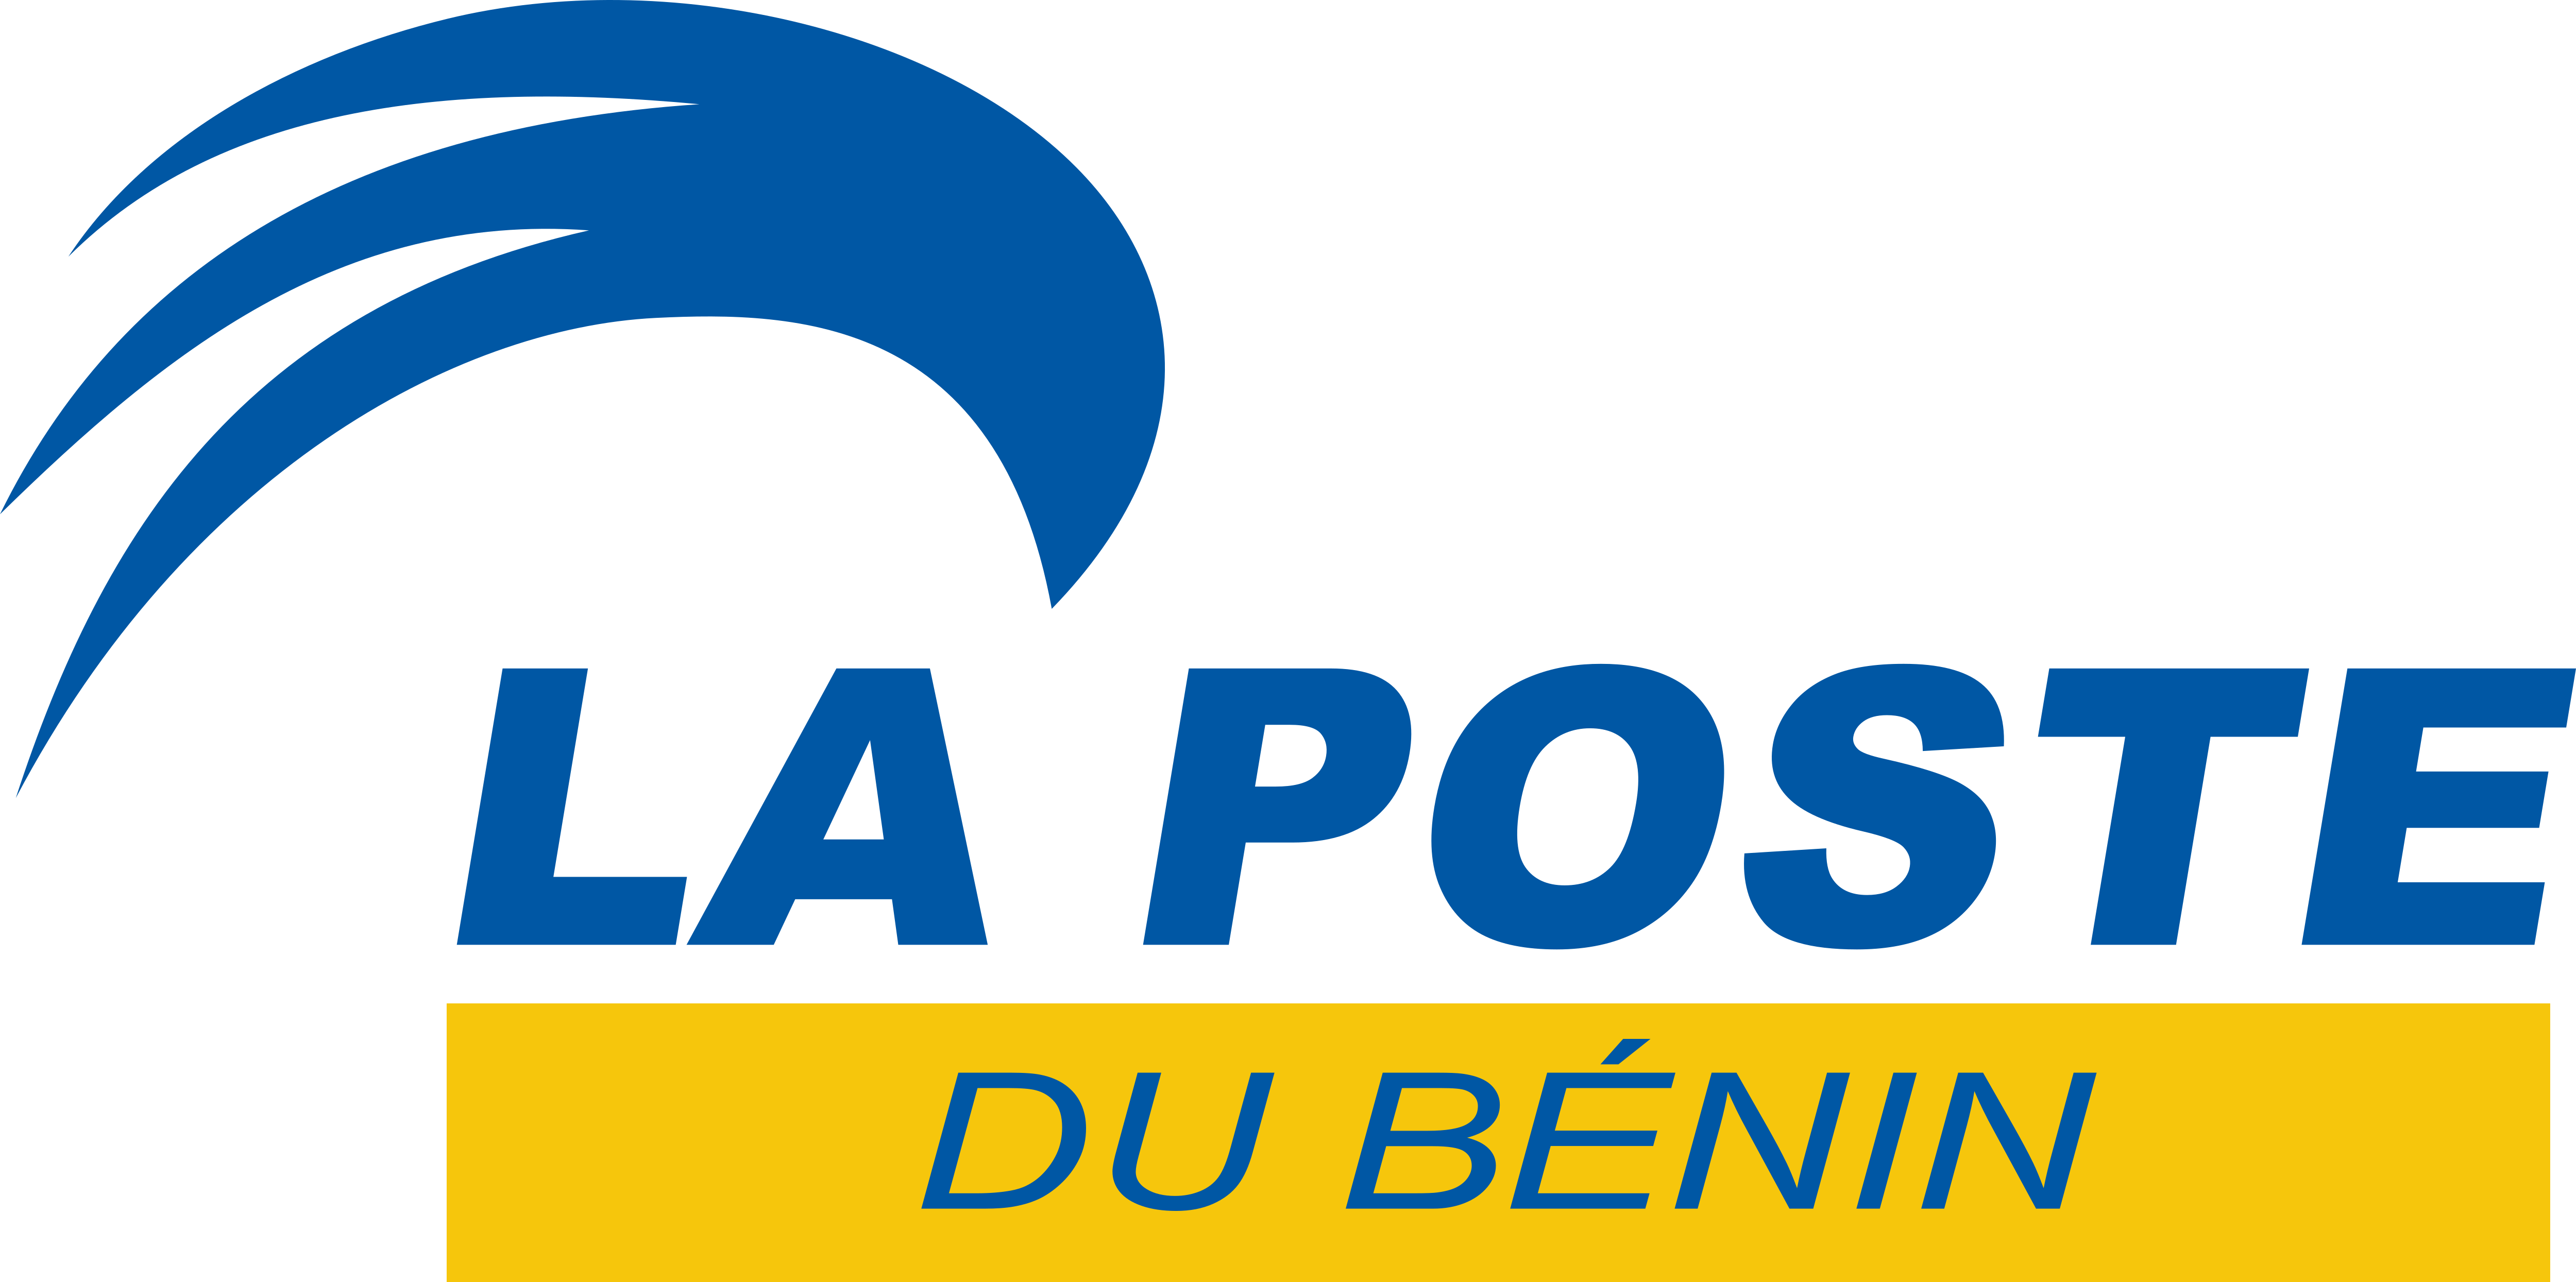 La Poste du Bénin – Logos Download